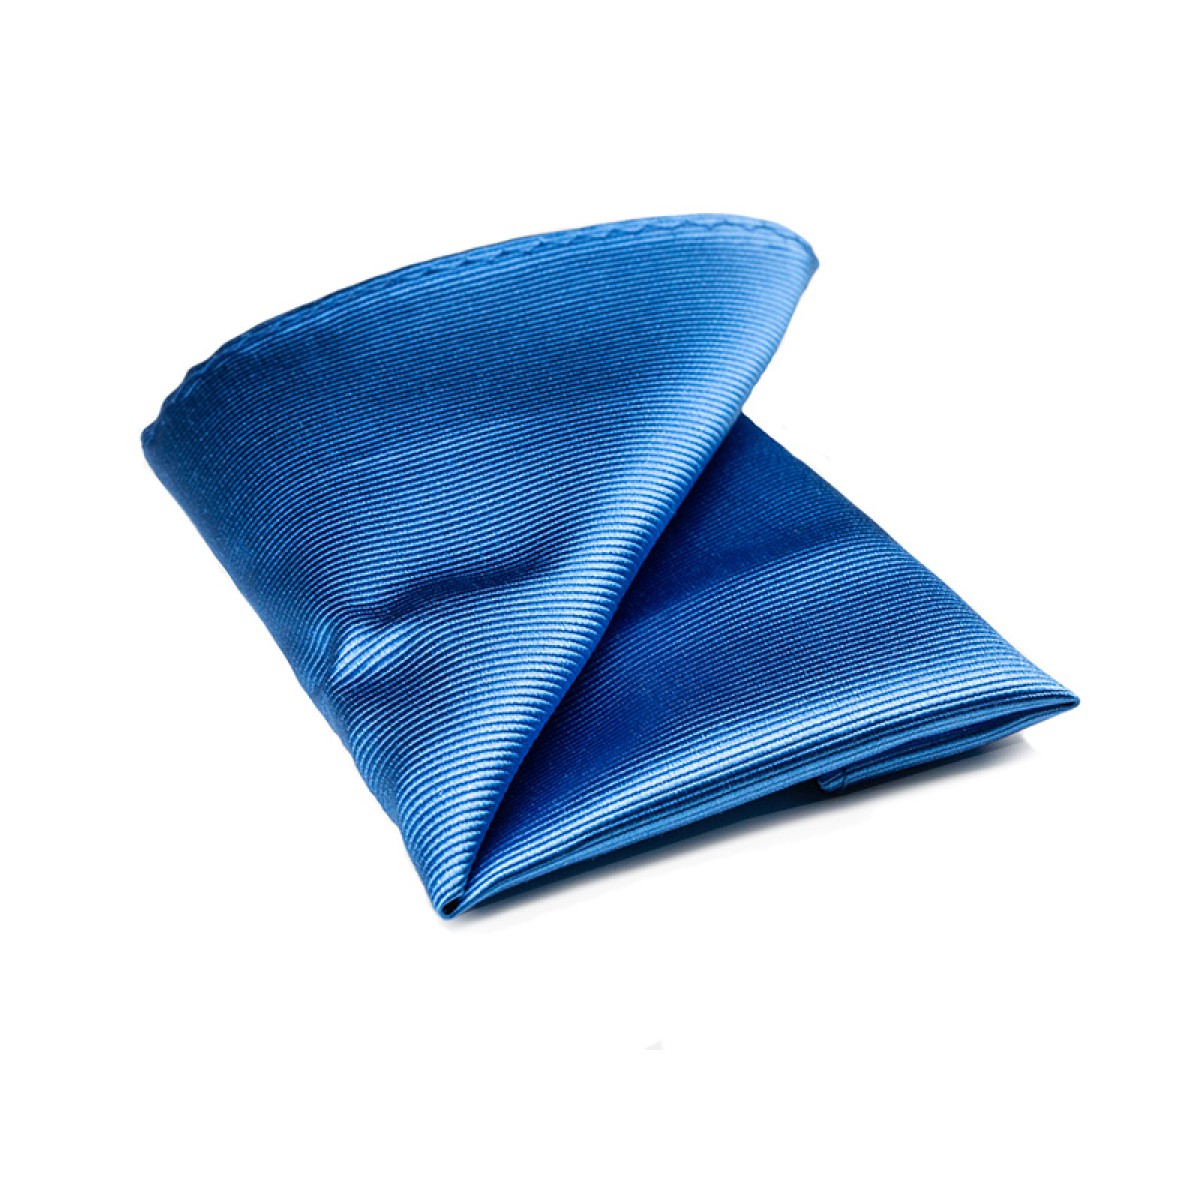 Hanky - silk - blue - 25x25cm - NOS